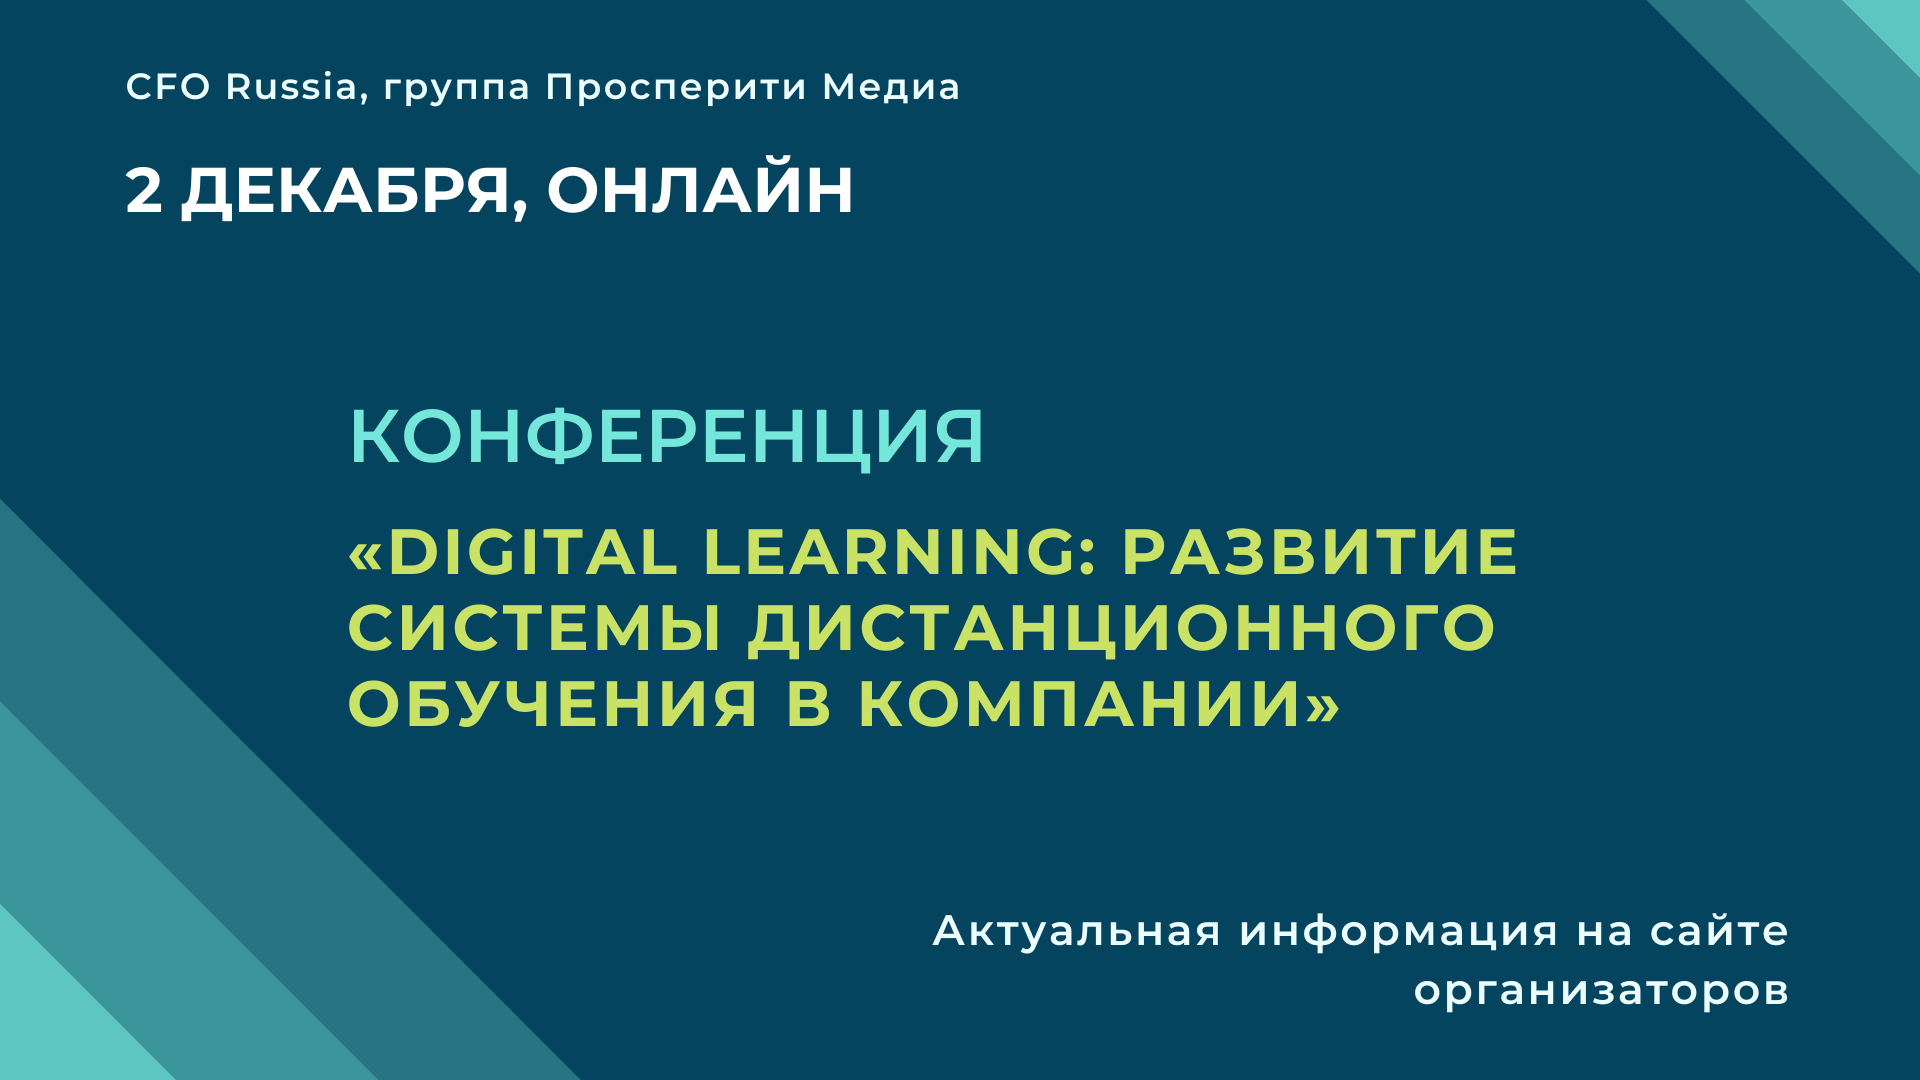  Digital Learning:      